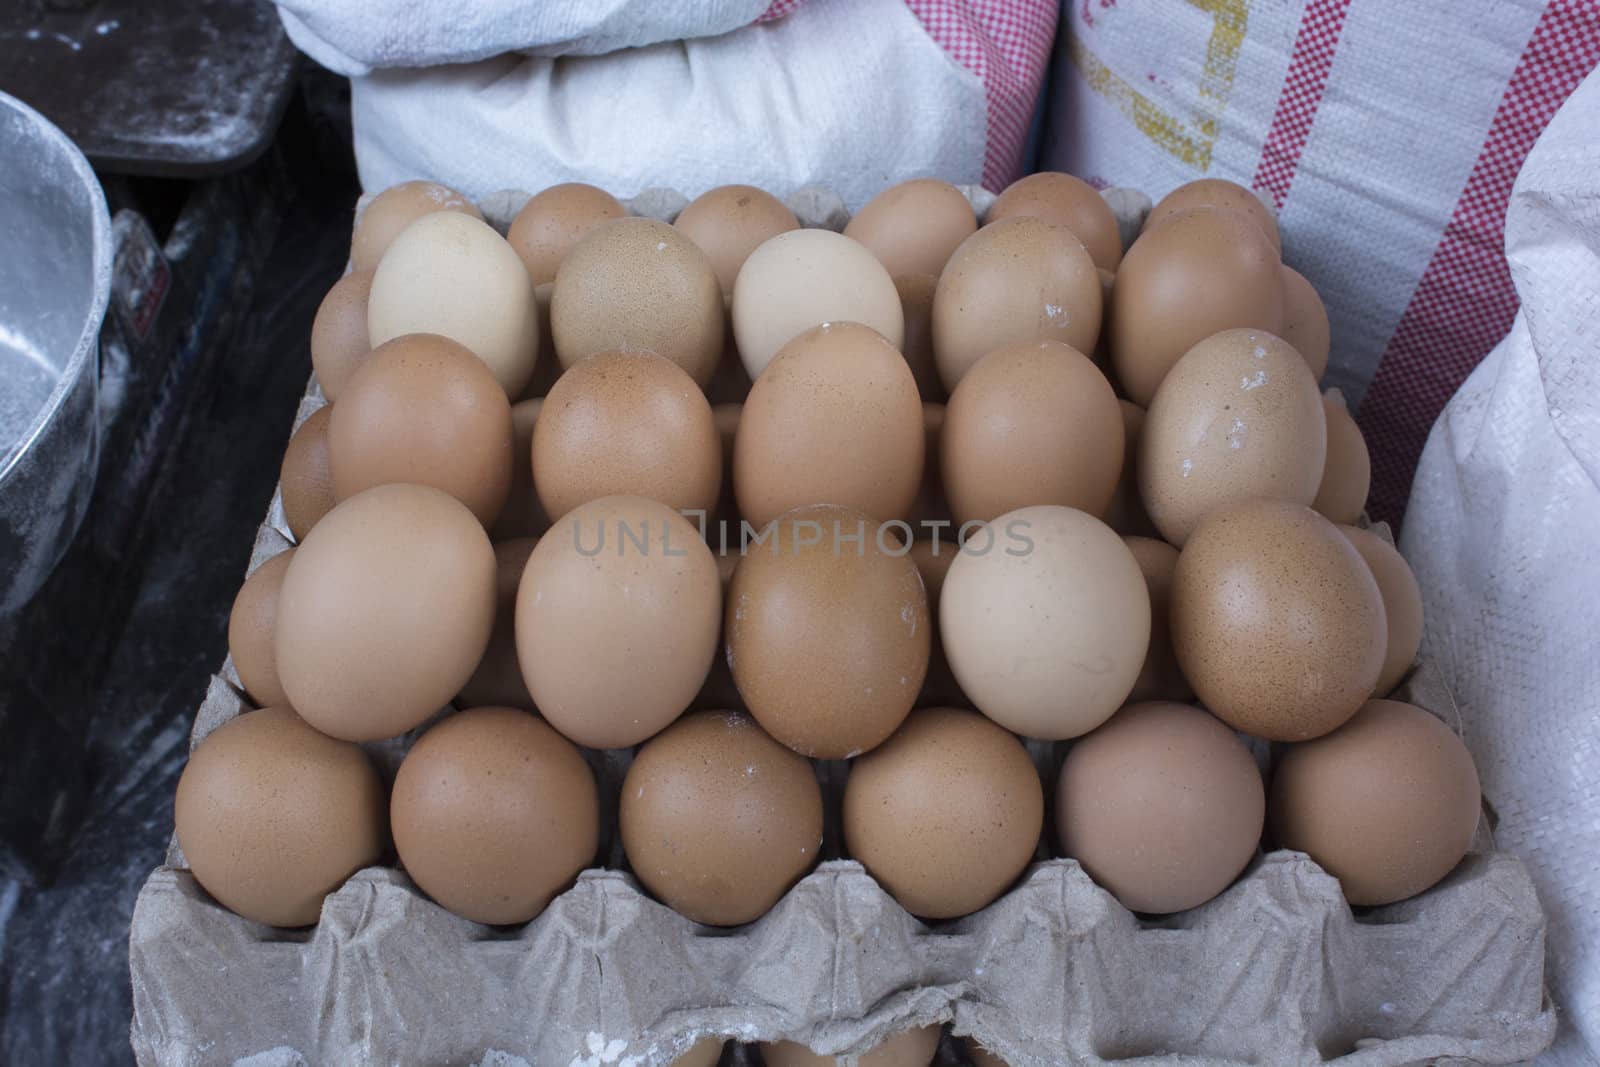 exposed eggs in carton container